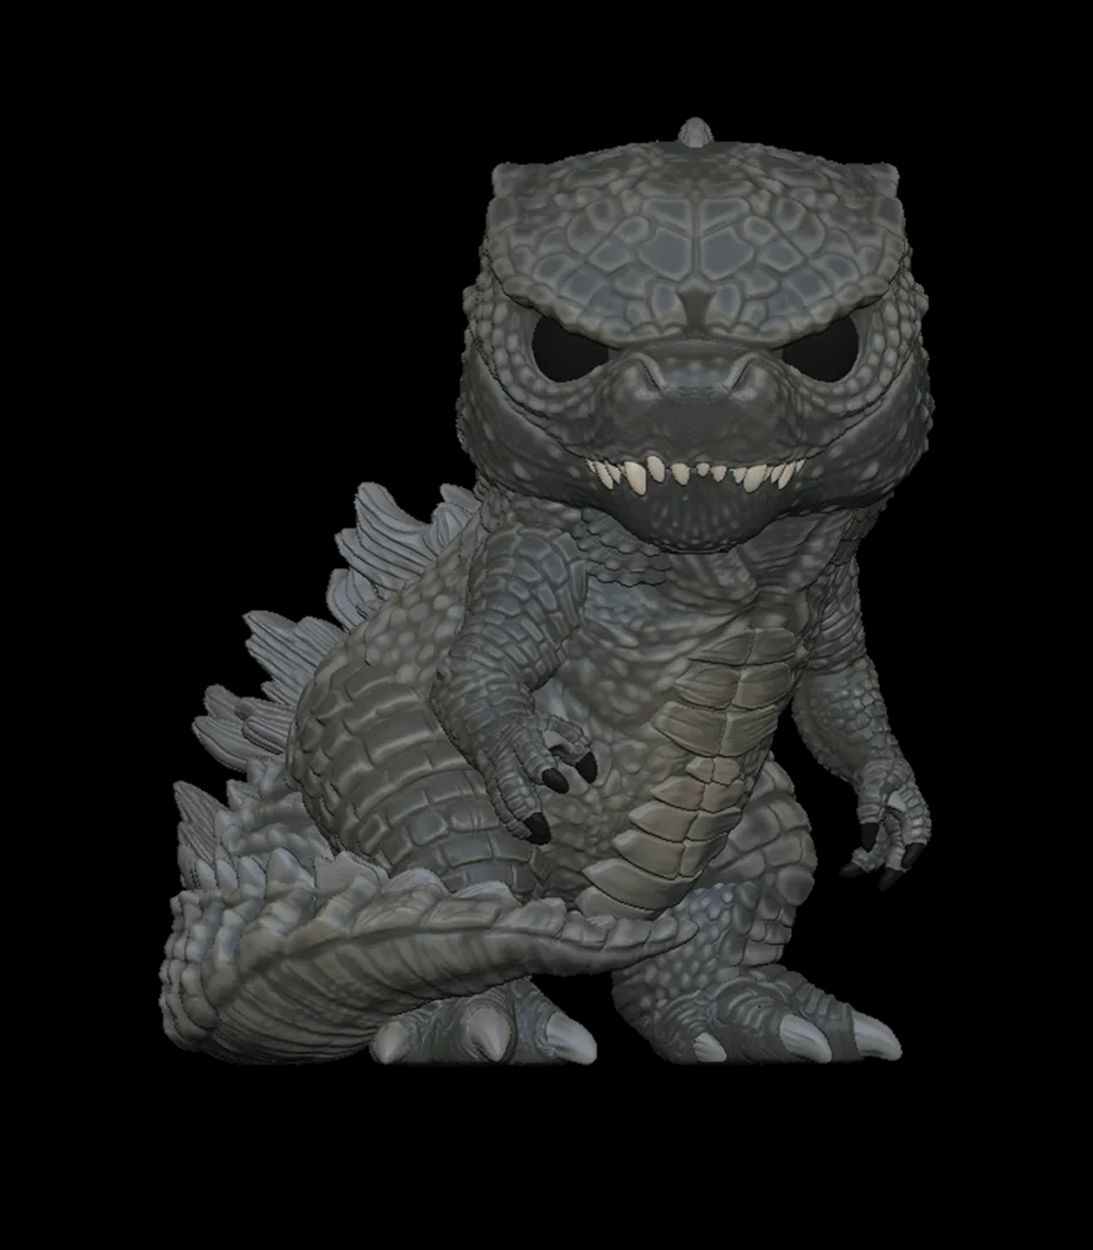 Godzilla Vs Kong Funko Pops Announced Ahead of the Monsters’ Epic Showdown